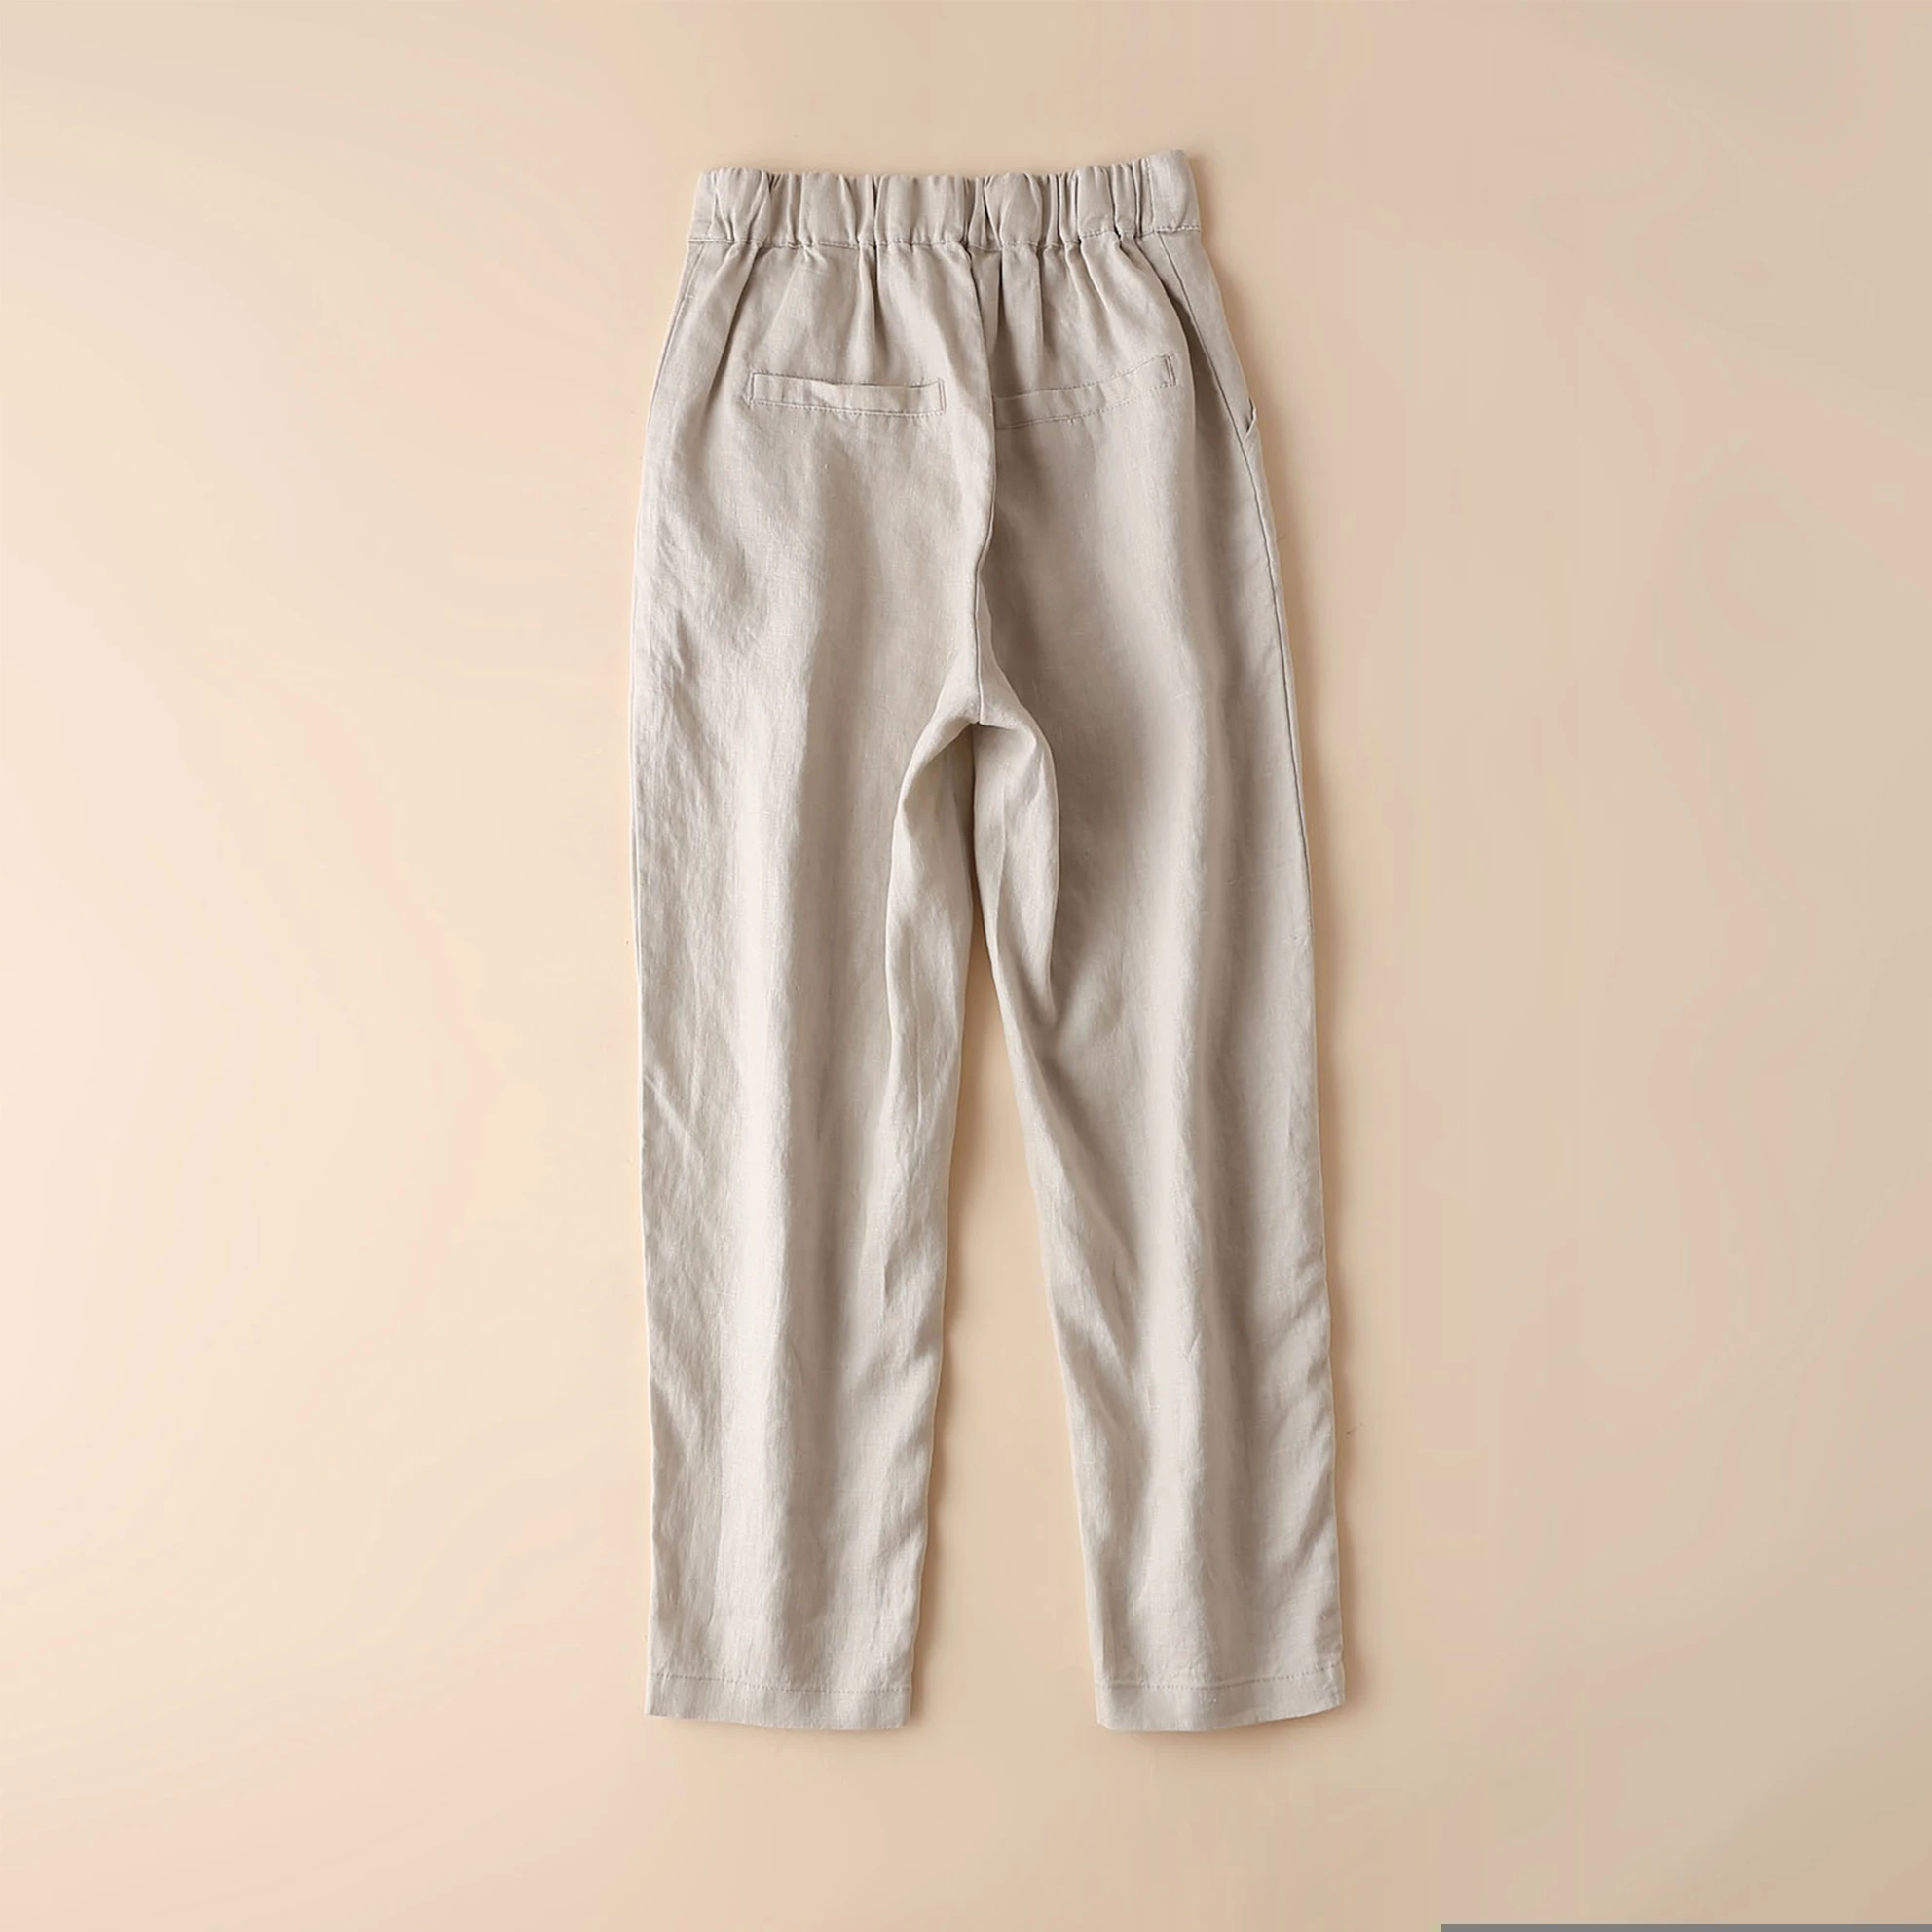 Wholesale pure linen high waist womens casual pencil trousers linen pants